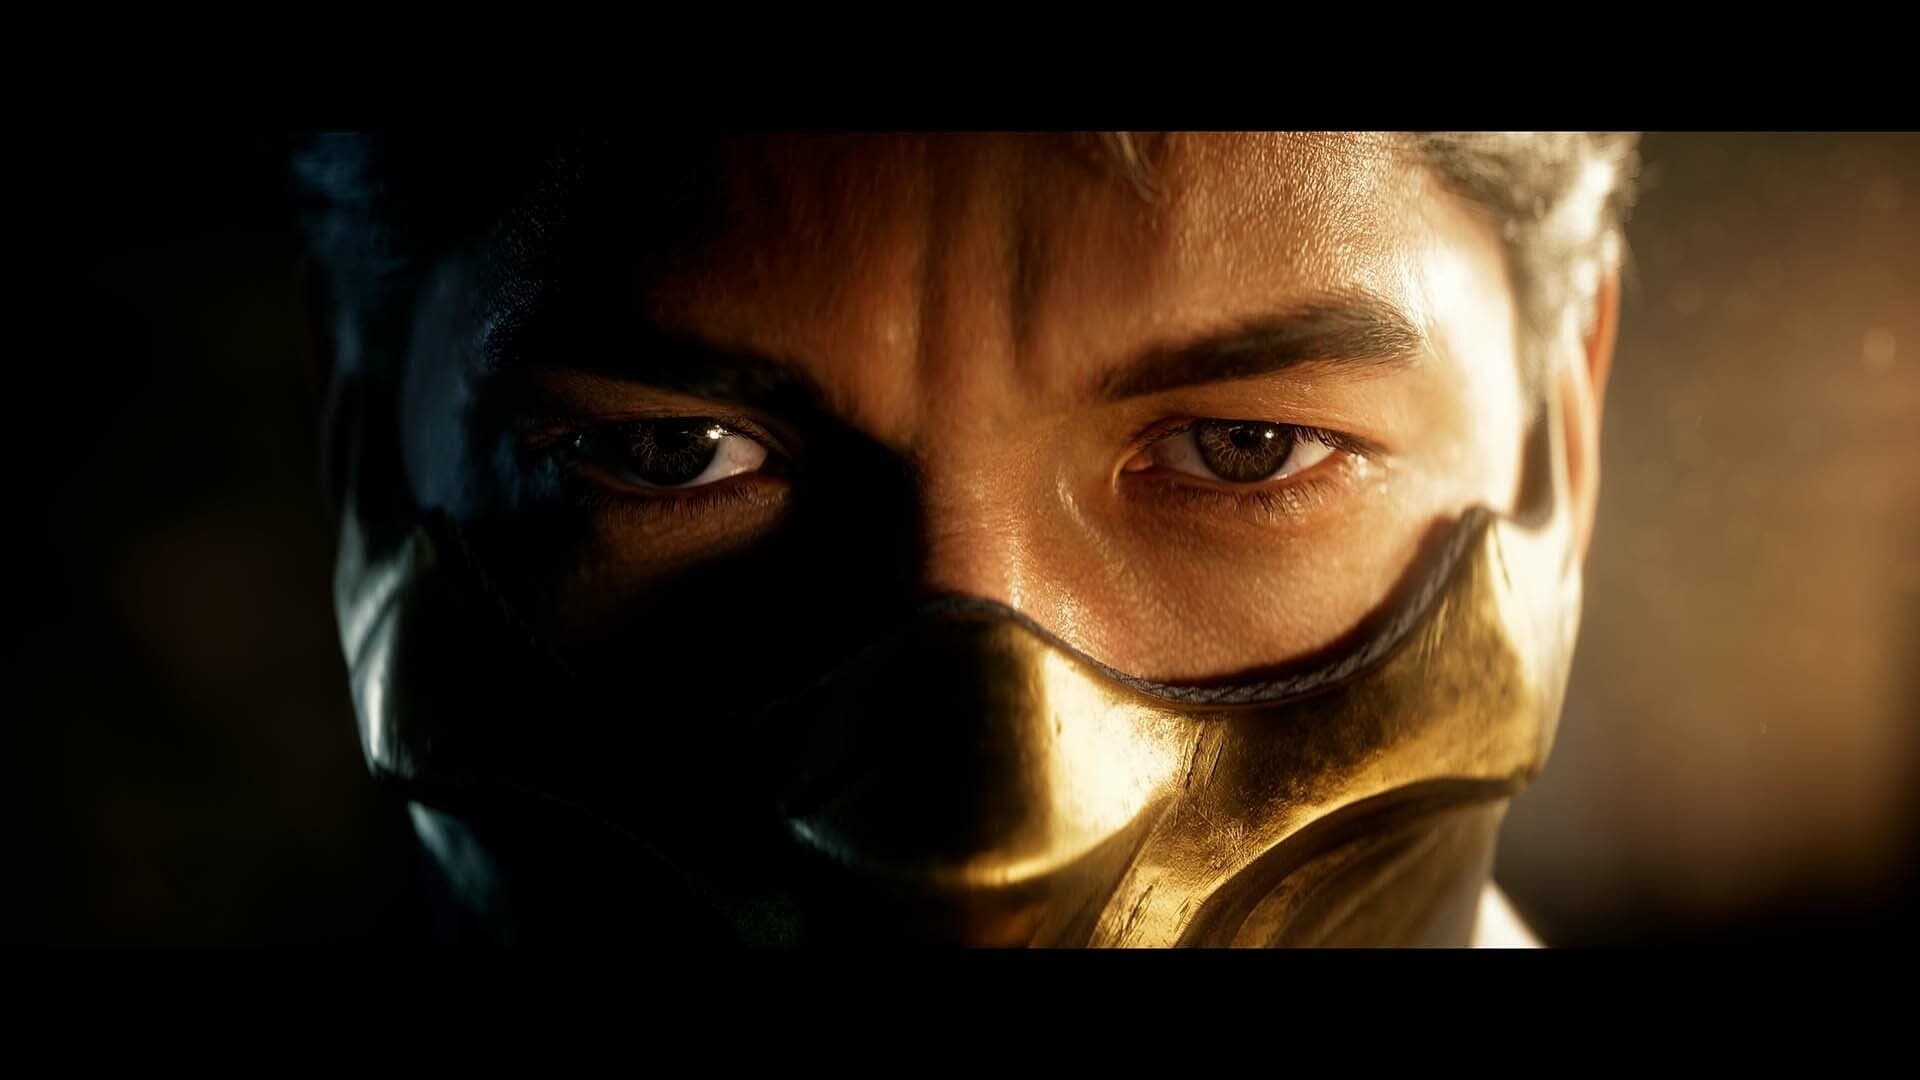 Mortal Kombat 1 (Premium Edition) - Xbox